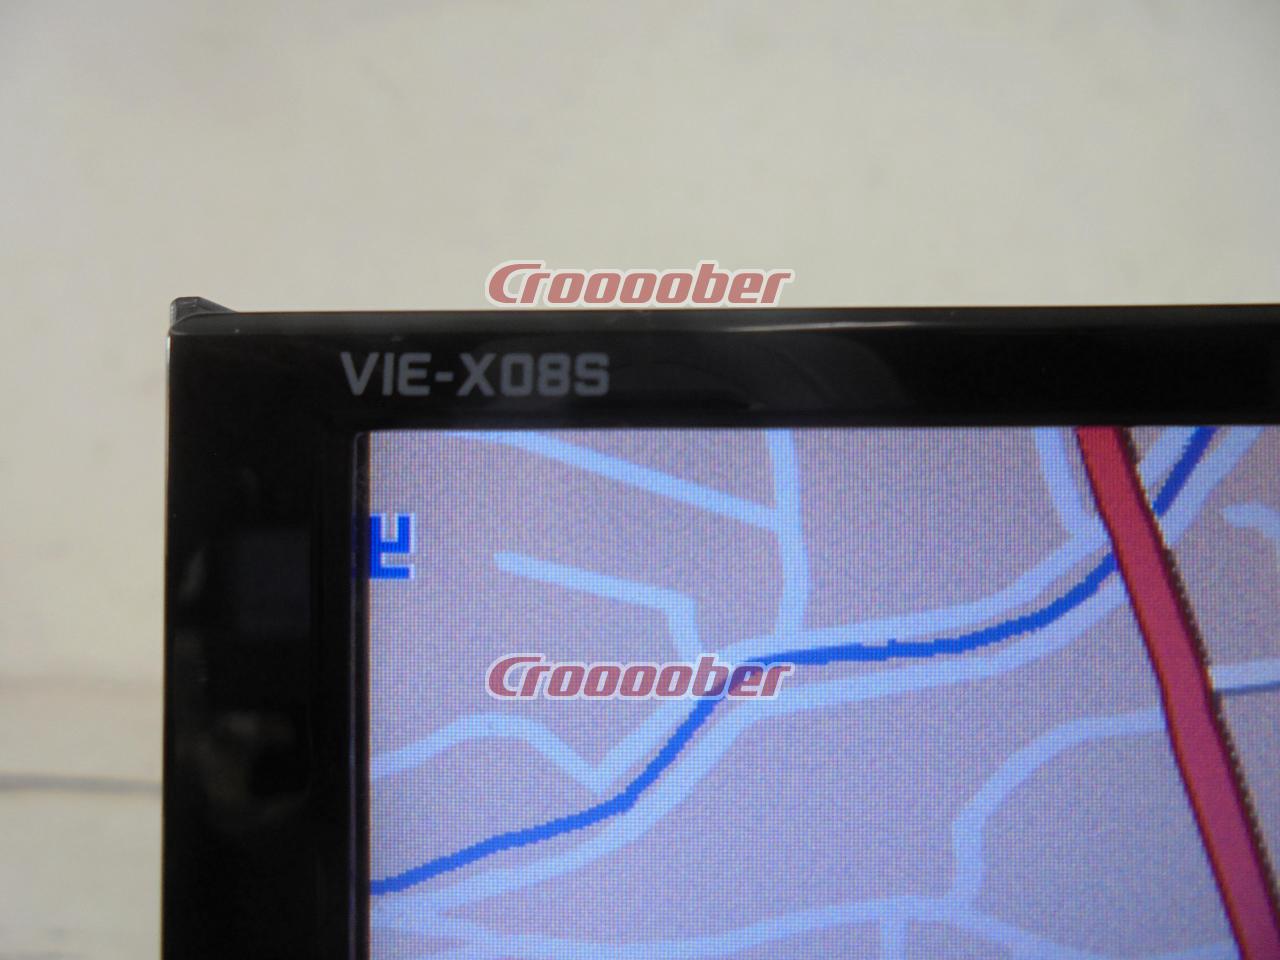 Alpine VIE-X08S | HDD Navigation(digital) | Croooober